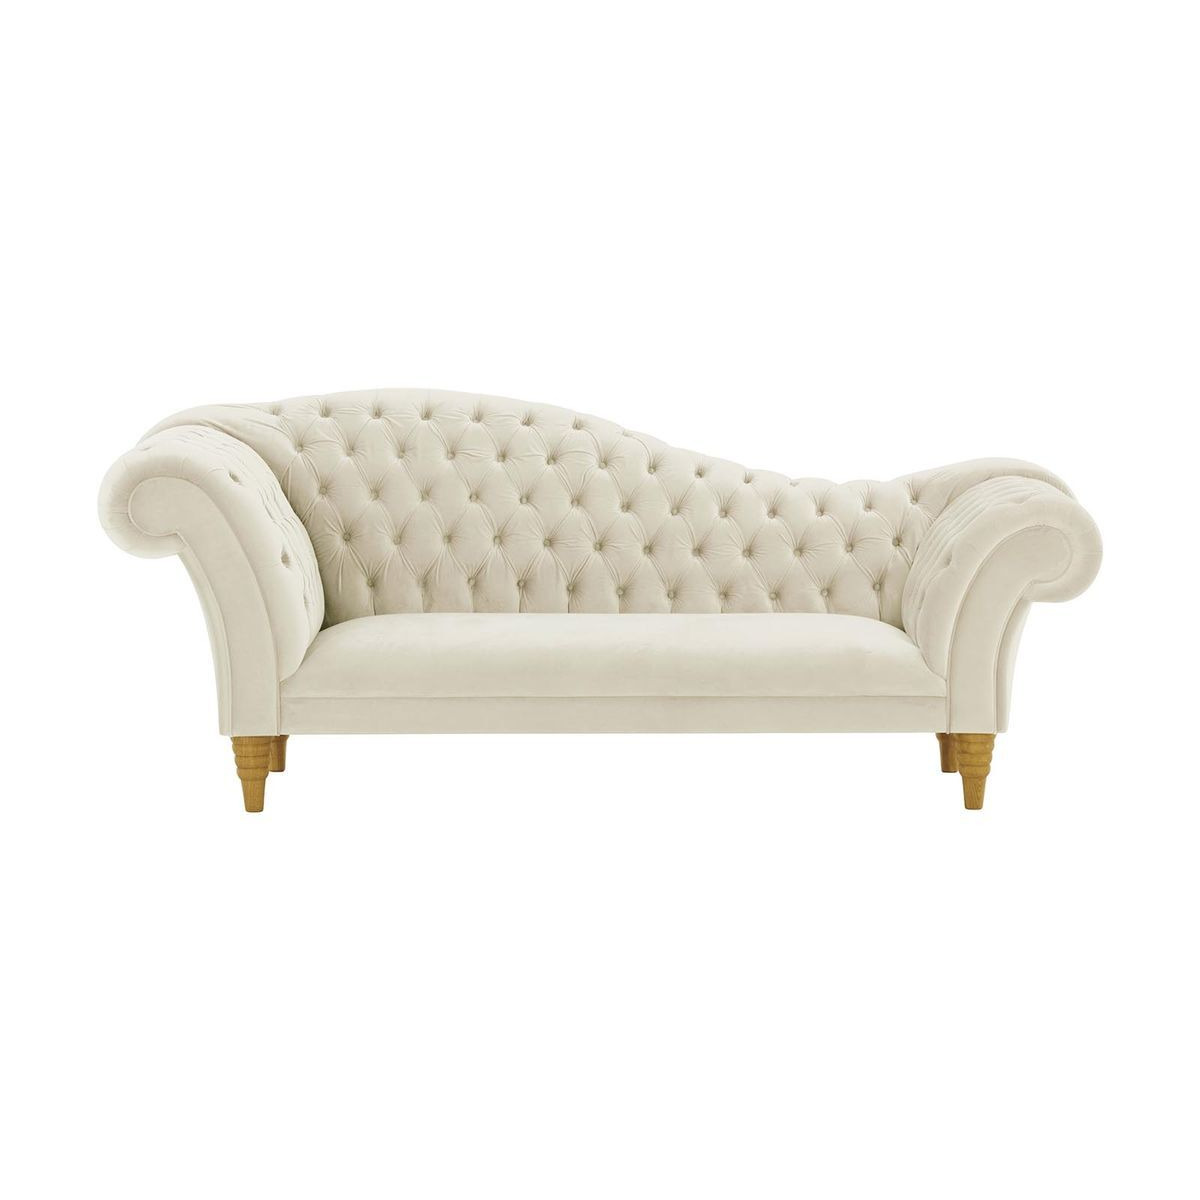 Chester Chaise Lounge Sofa, light beige, Leg colour: like oak - image 1